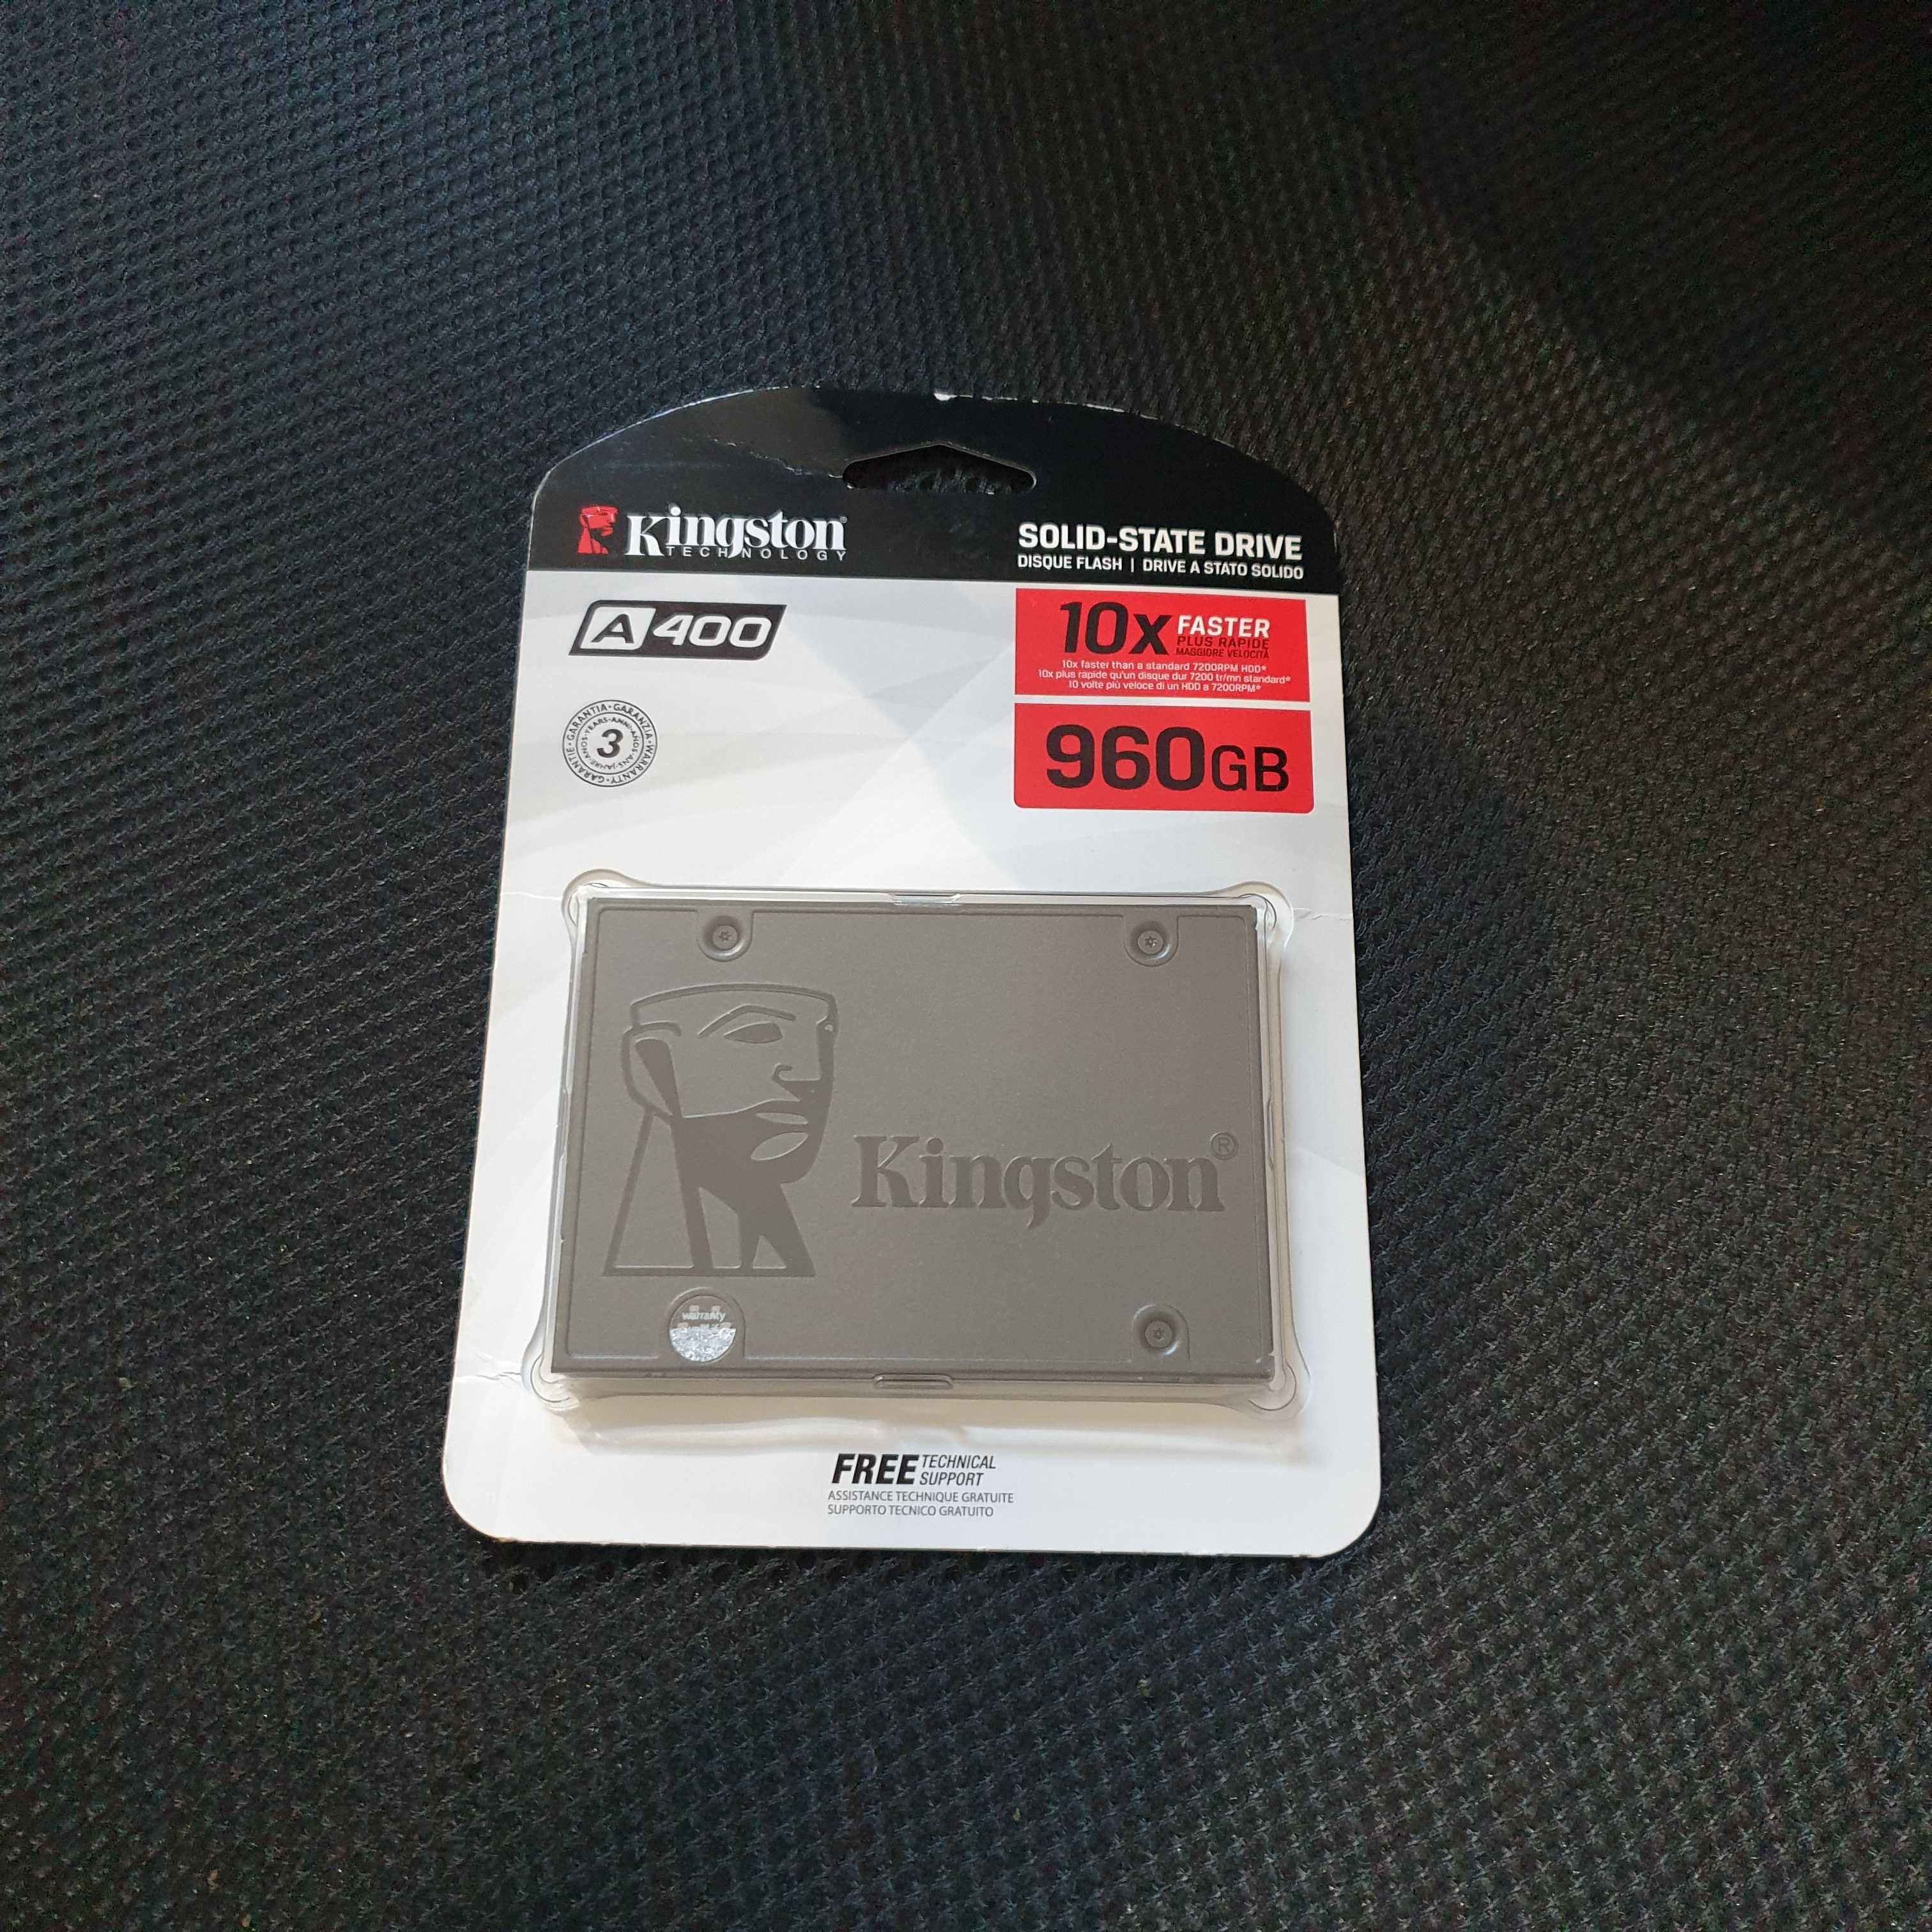 disco ssd kingston 960gb, novo embalagem selada